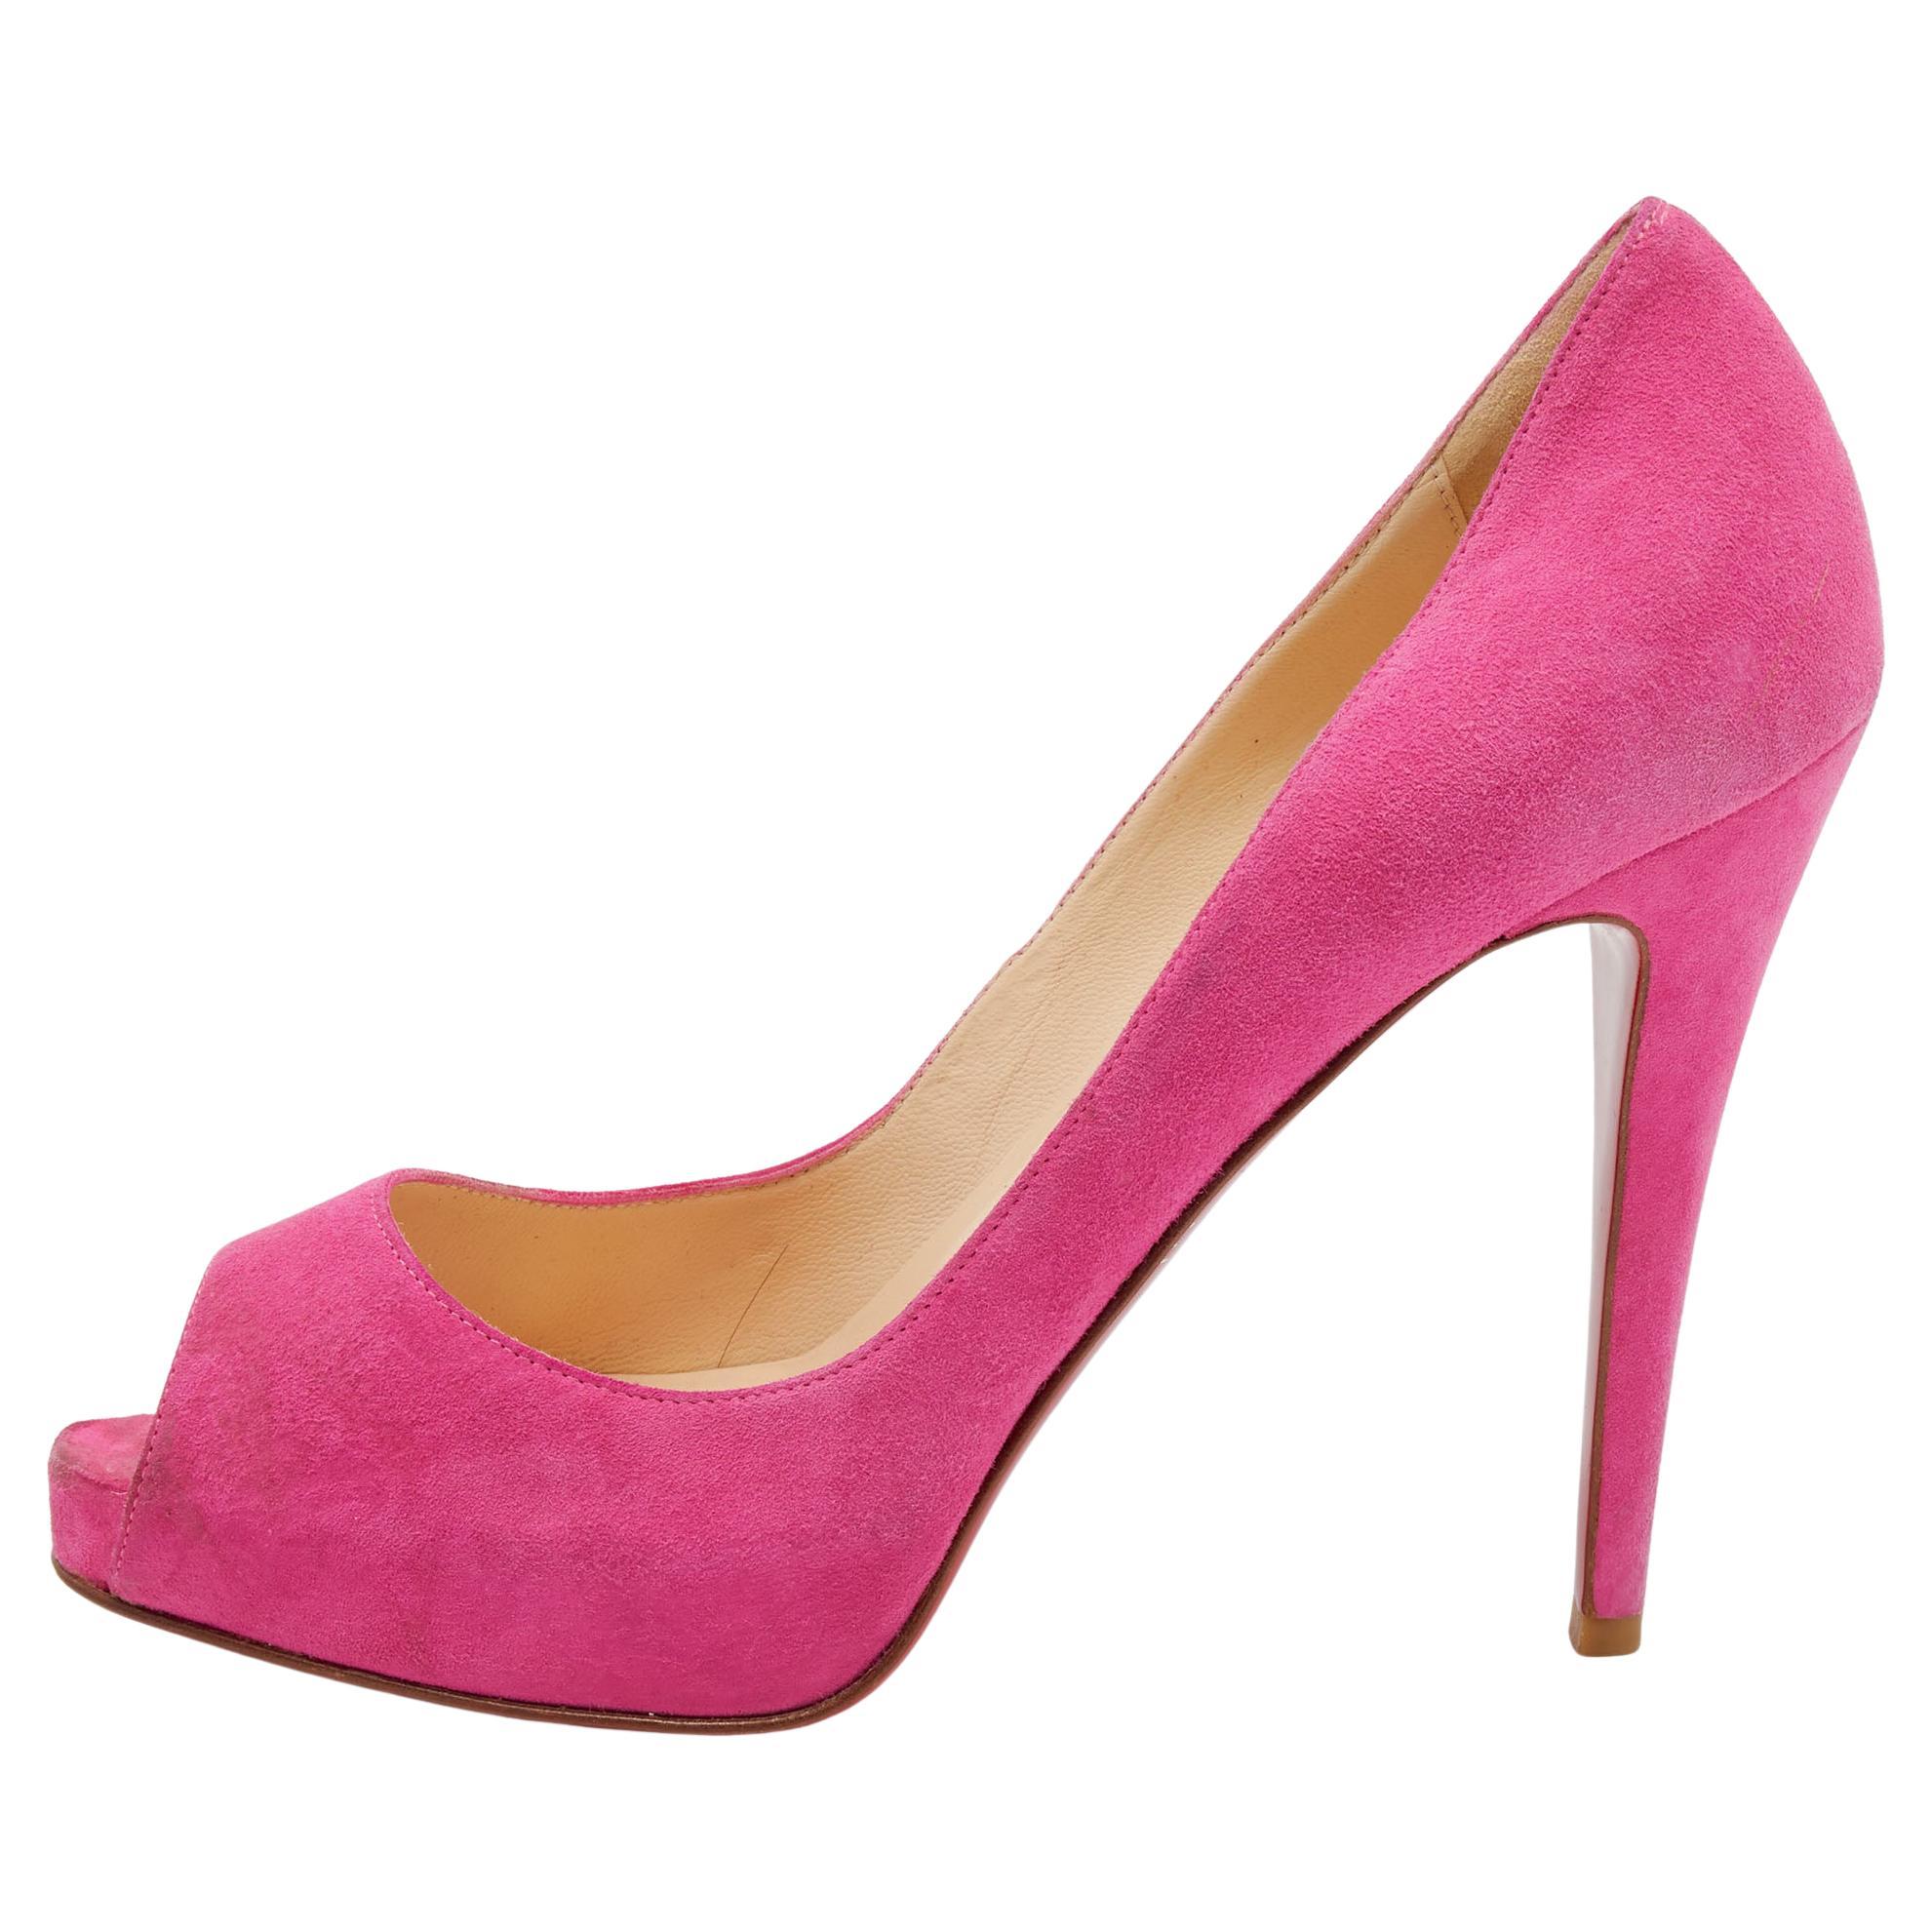 Christian Louboutin Pink Suede Hyper Prive Peep Toe Platform Pumps Size 38.5